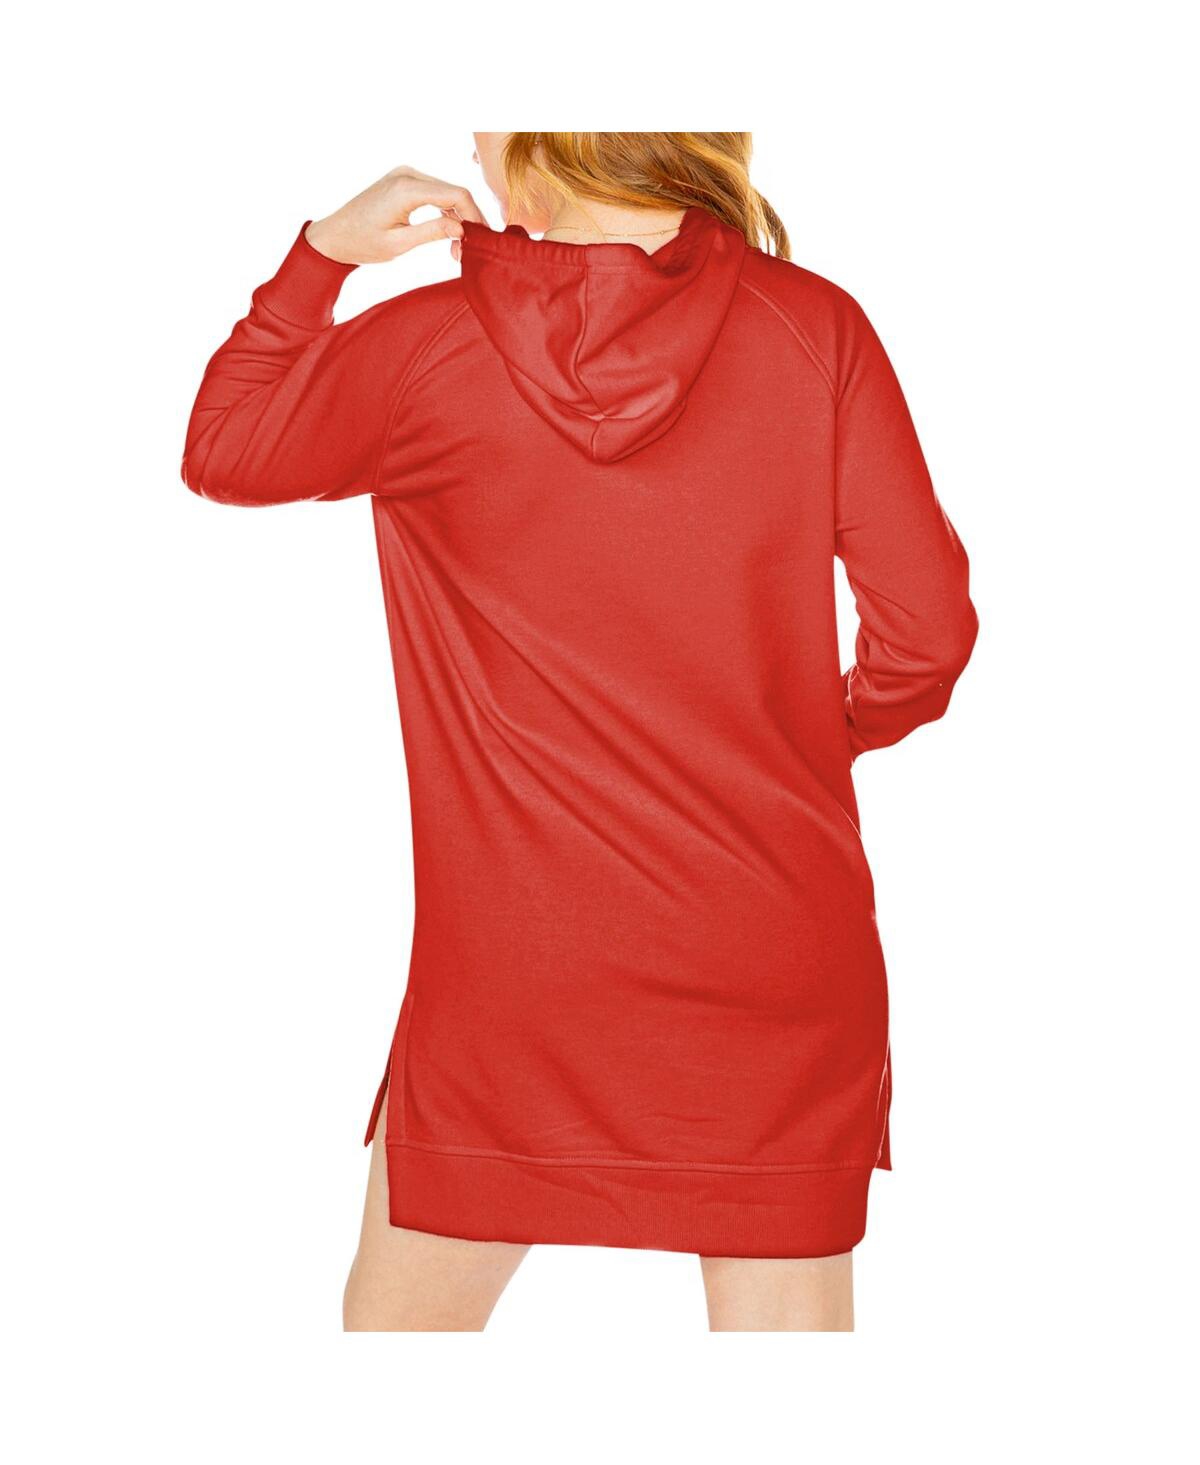 Shop Gameday Couture Women's  Red Georgia Bulldogs Take A Knee Raglan Hooded Sweatshirt Dress